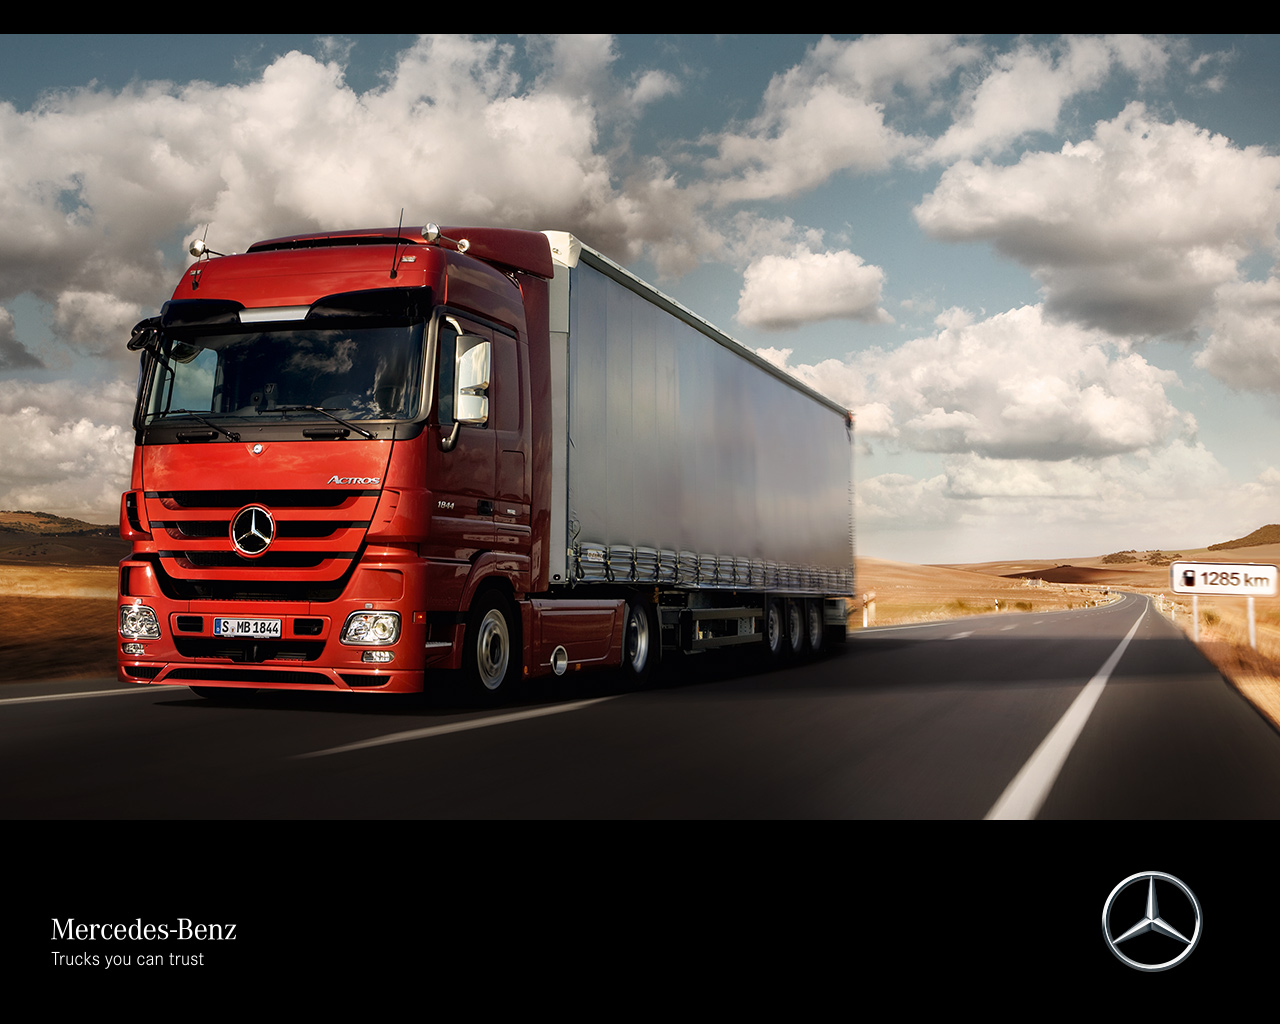 Actros: Multimedia Benz Trucks You Can Trust